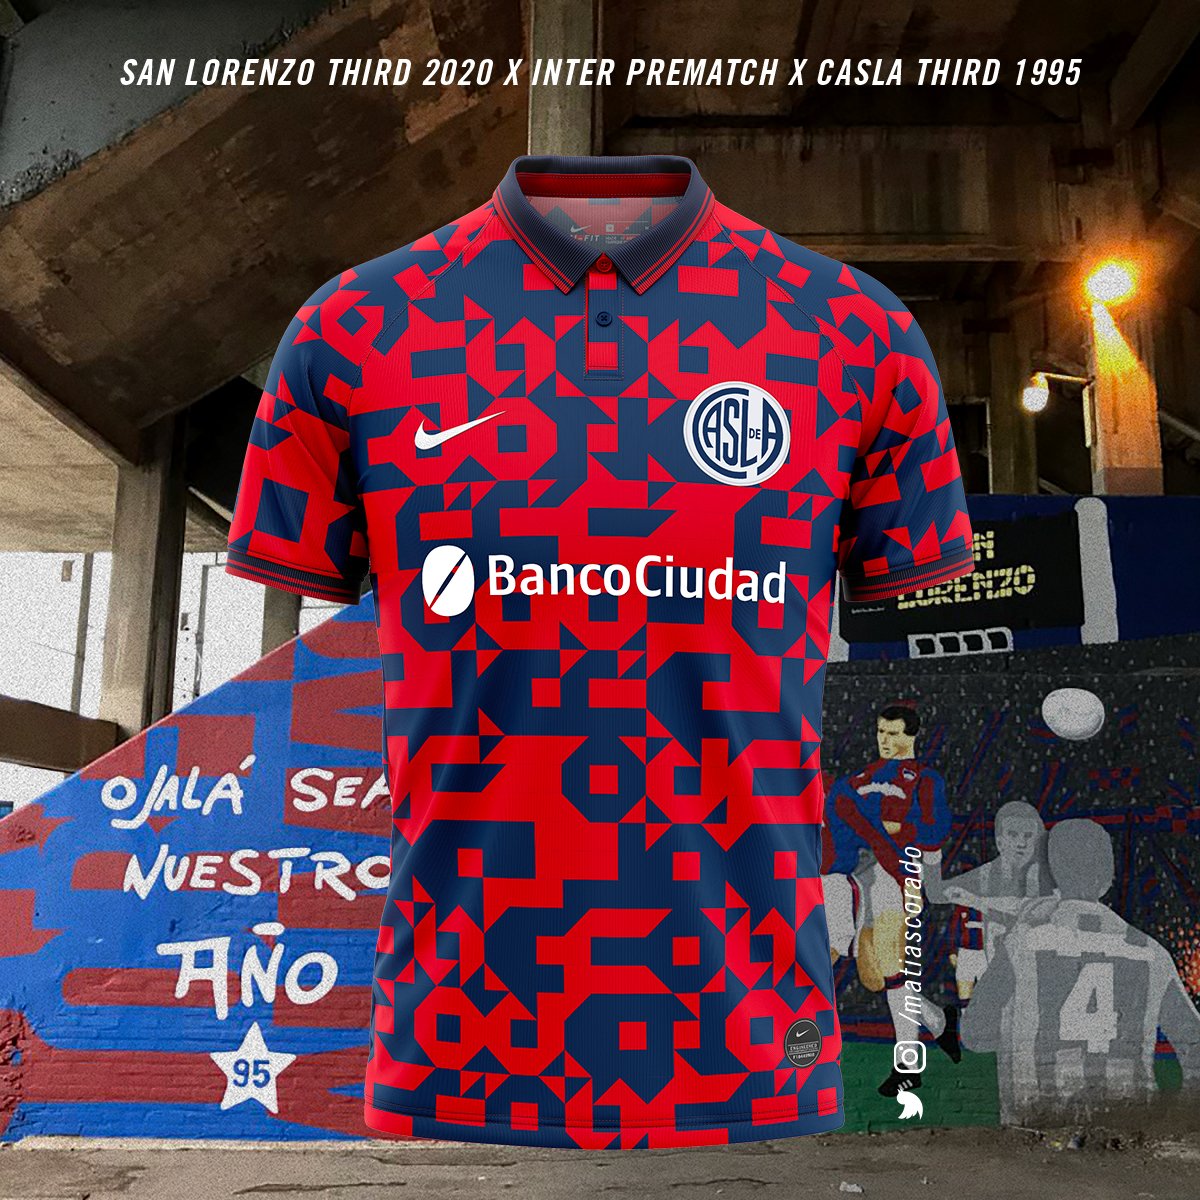 تويتر \ Matías Corado - en Comunicación Visual على تويتر: "🔵🔴🔵IMAGINANDO SAN LORENZO🔵🔴🔵 ¿Cómo serían las camisetas de con templates actuales de Diseño fantasía de @SanLorenzo THIRD @NikeArgentina